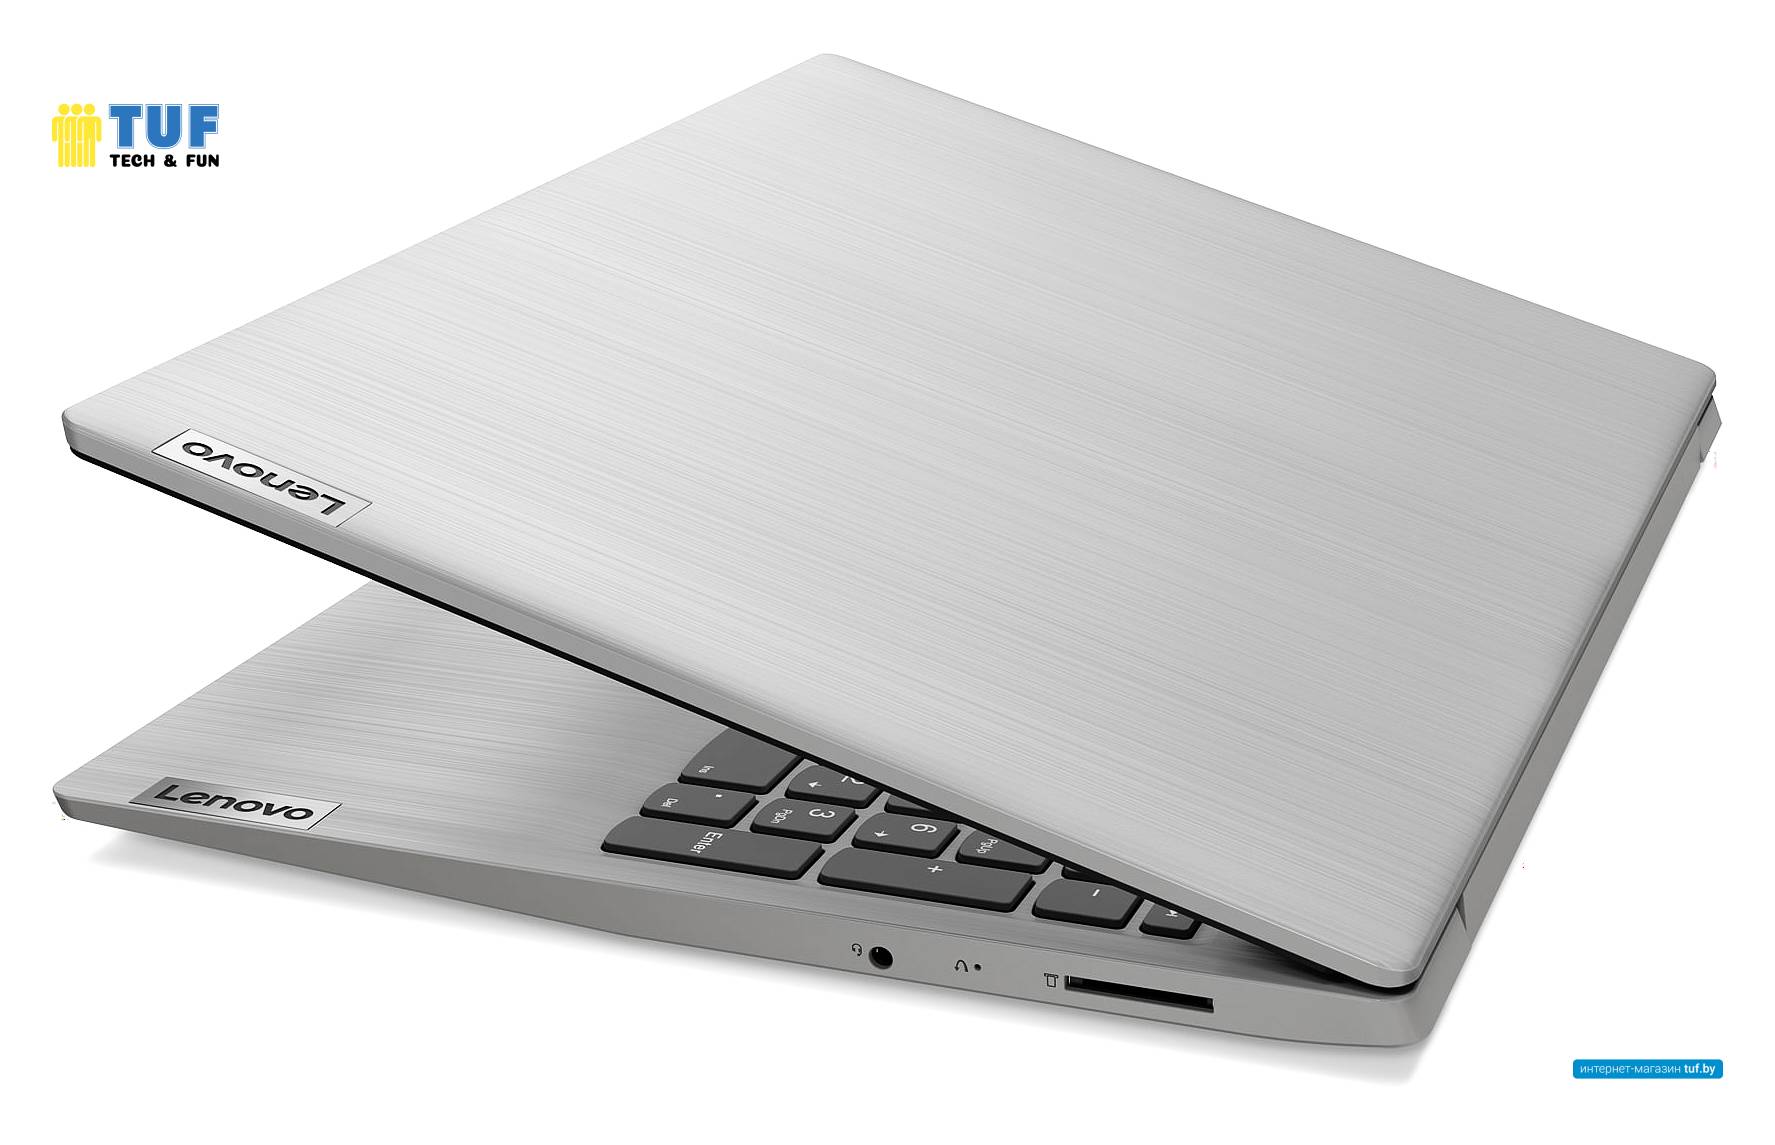 Ноутбук Lenovo IdeaPad 3 15IIL05 81WE007DRK